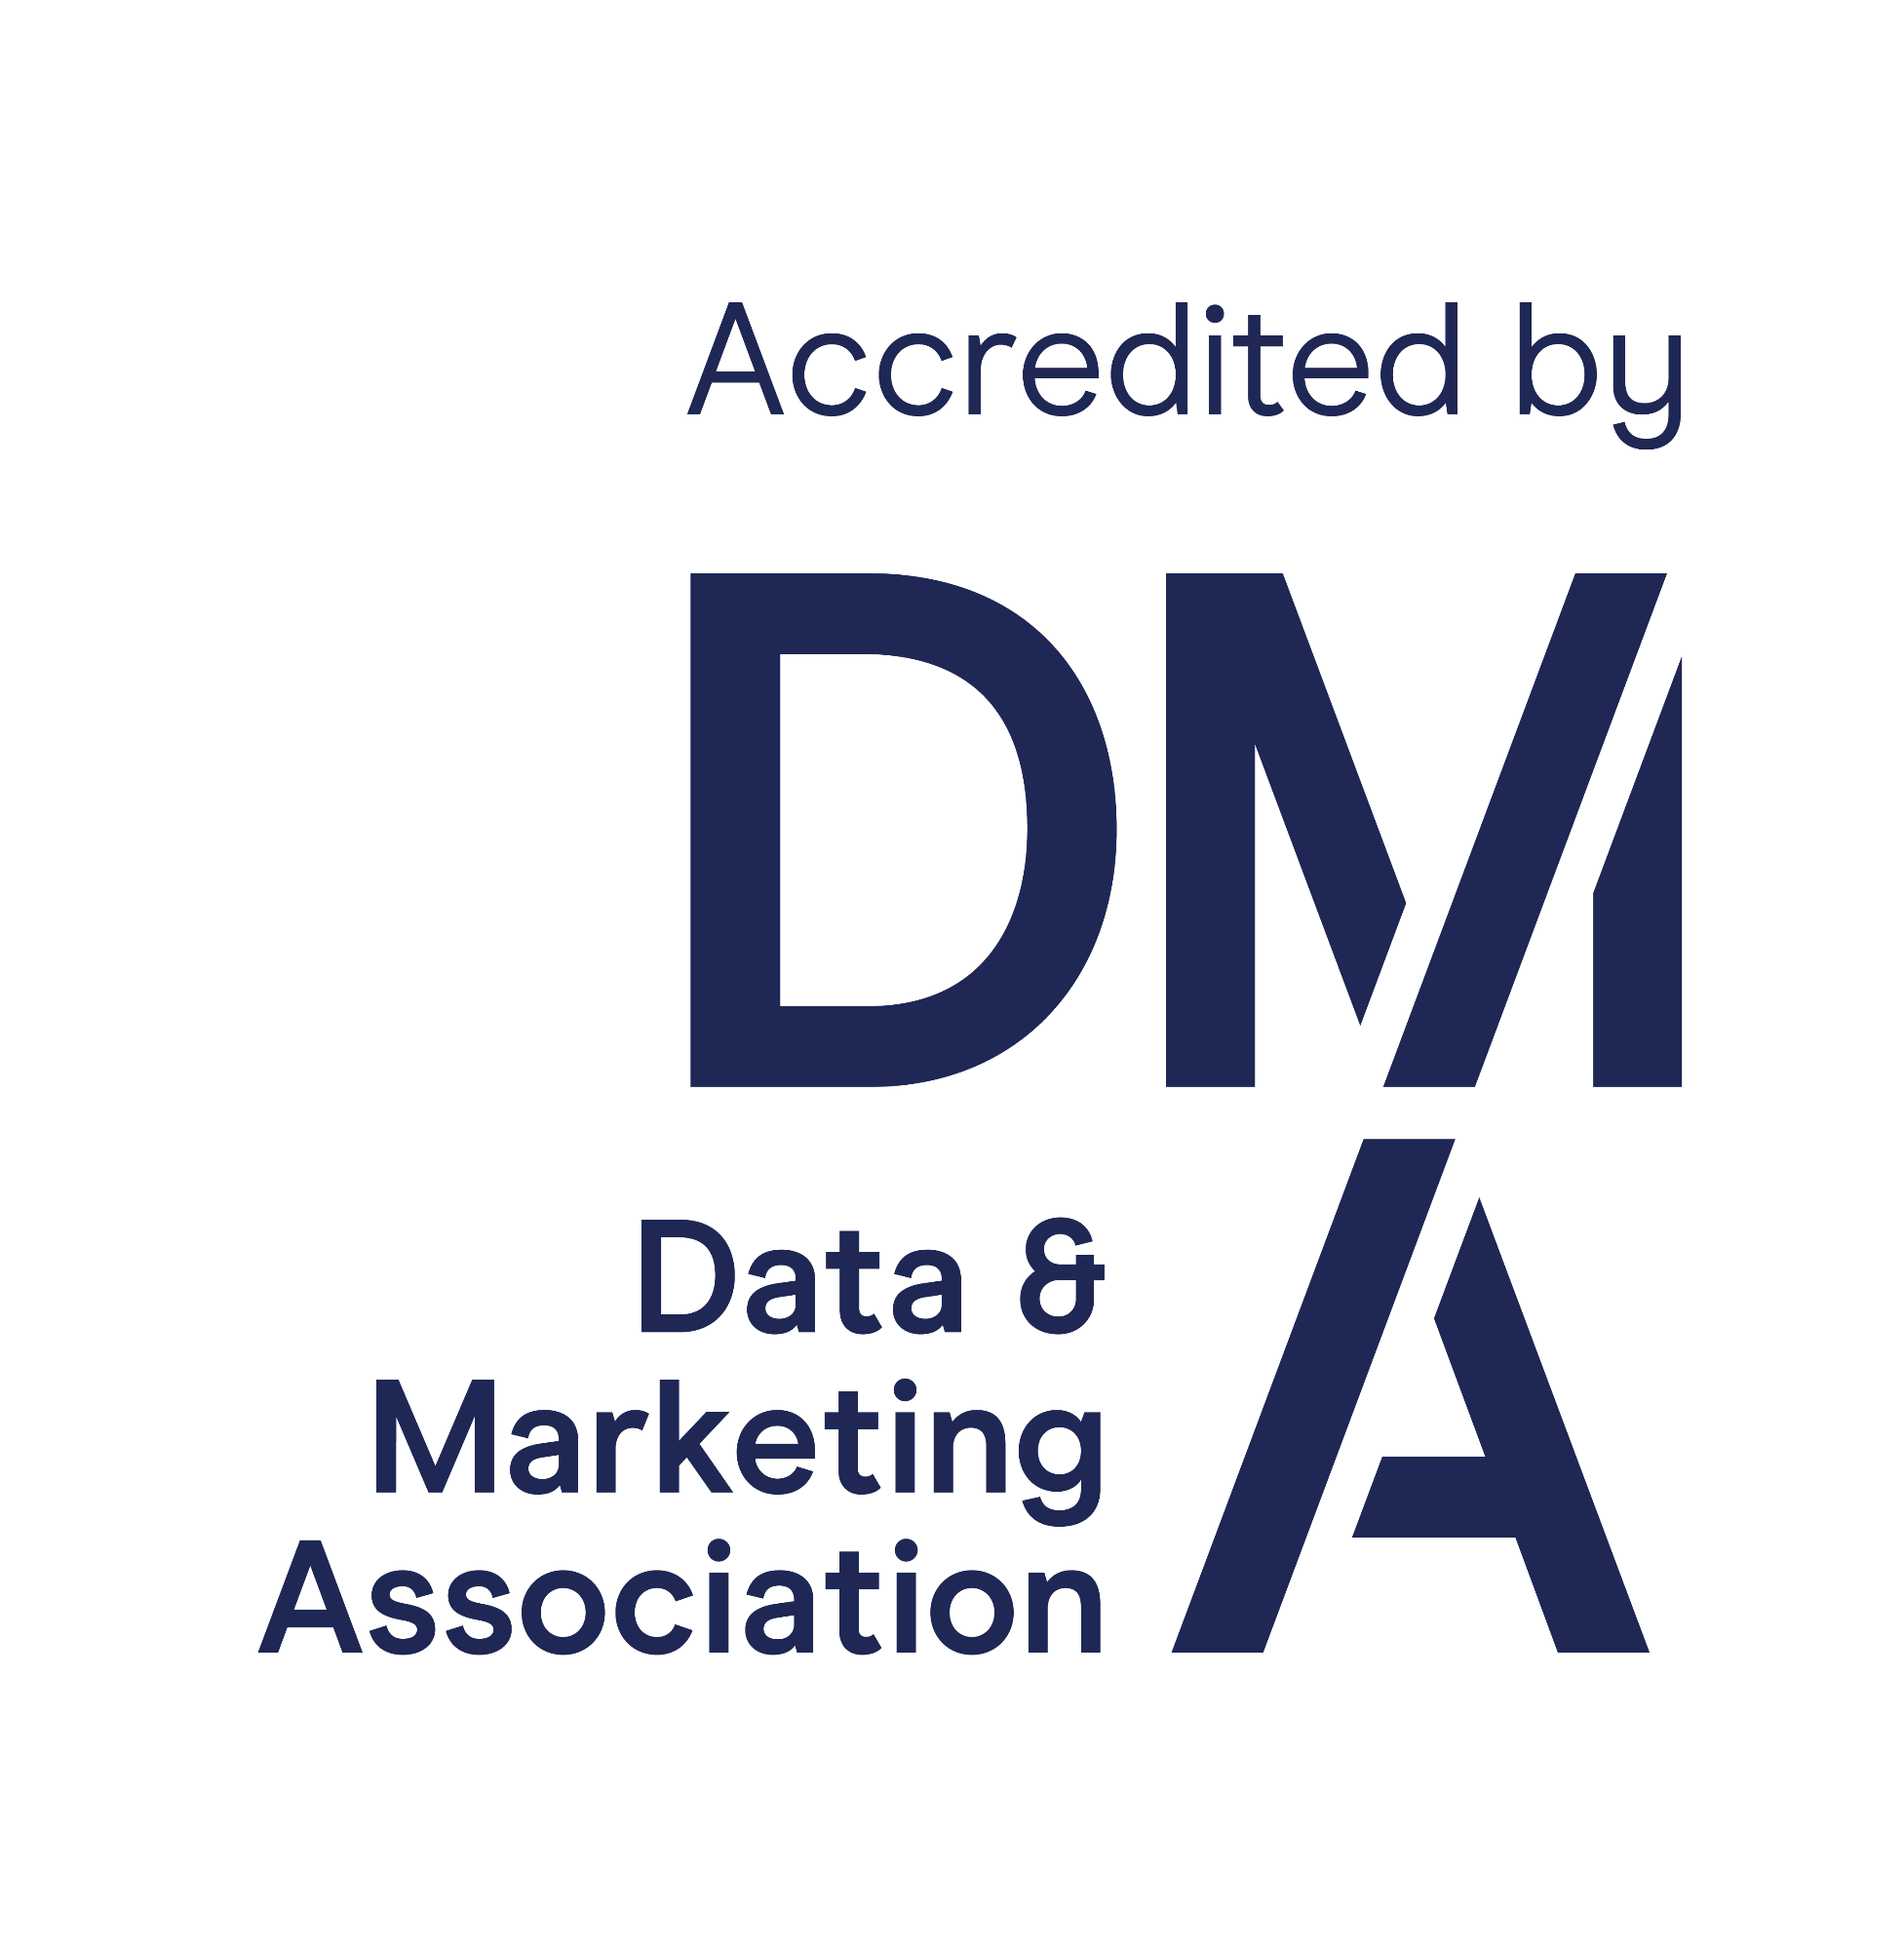 Data & Marketing Association accreditation logo